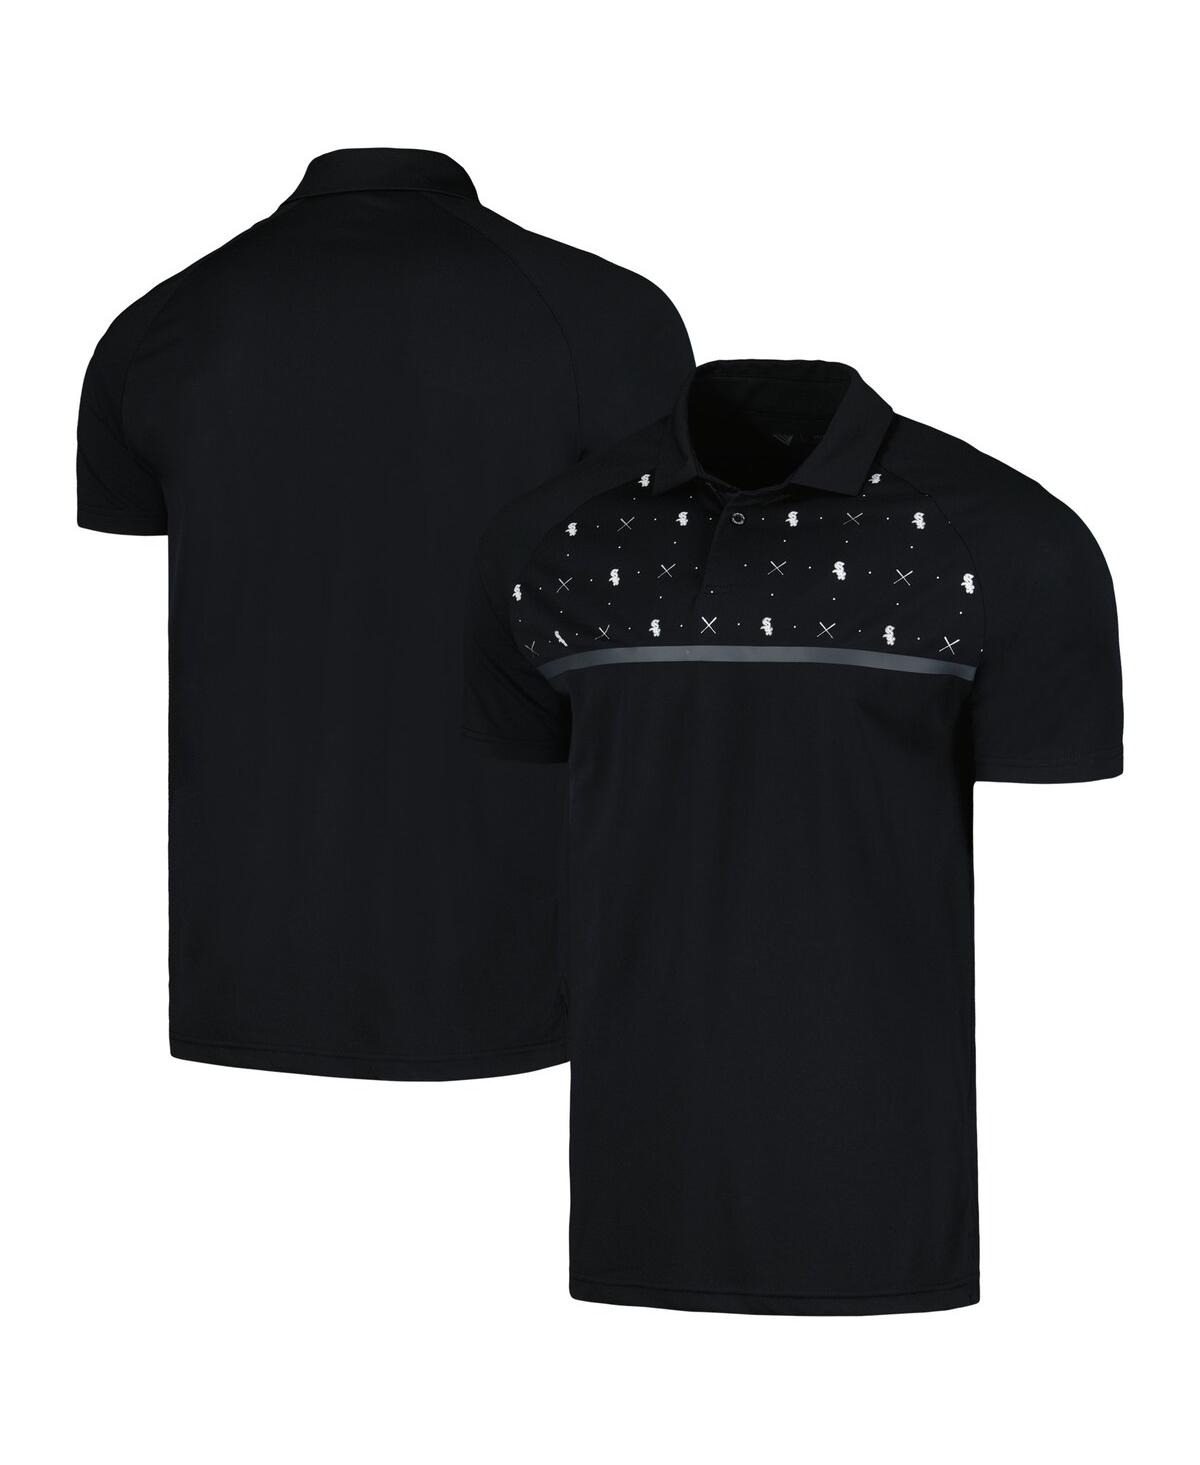 Shop Levelwear Men's  Black Chicago White Sox Sector Batter Up Raglan Polo Shirt